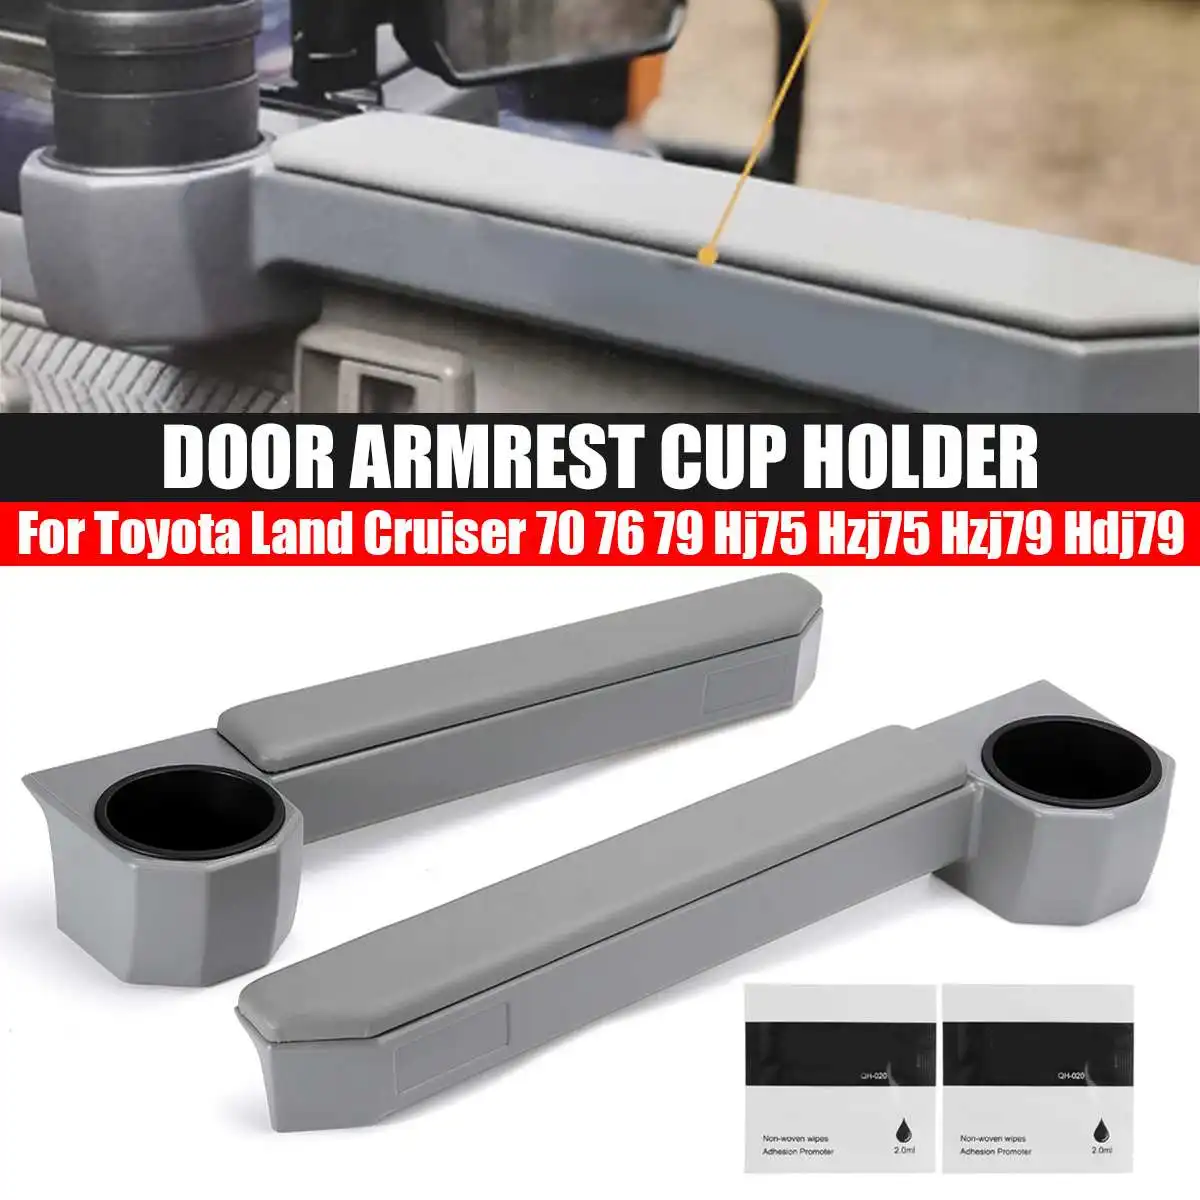 

2Pcs Door Armrest Cup Holder Organizer For Toyota Land Cruiser 70 76 79 Hj75 Hzj75 Hzj79 Hdj79 Car Accessories